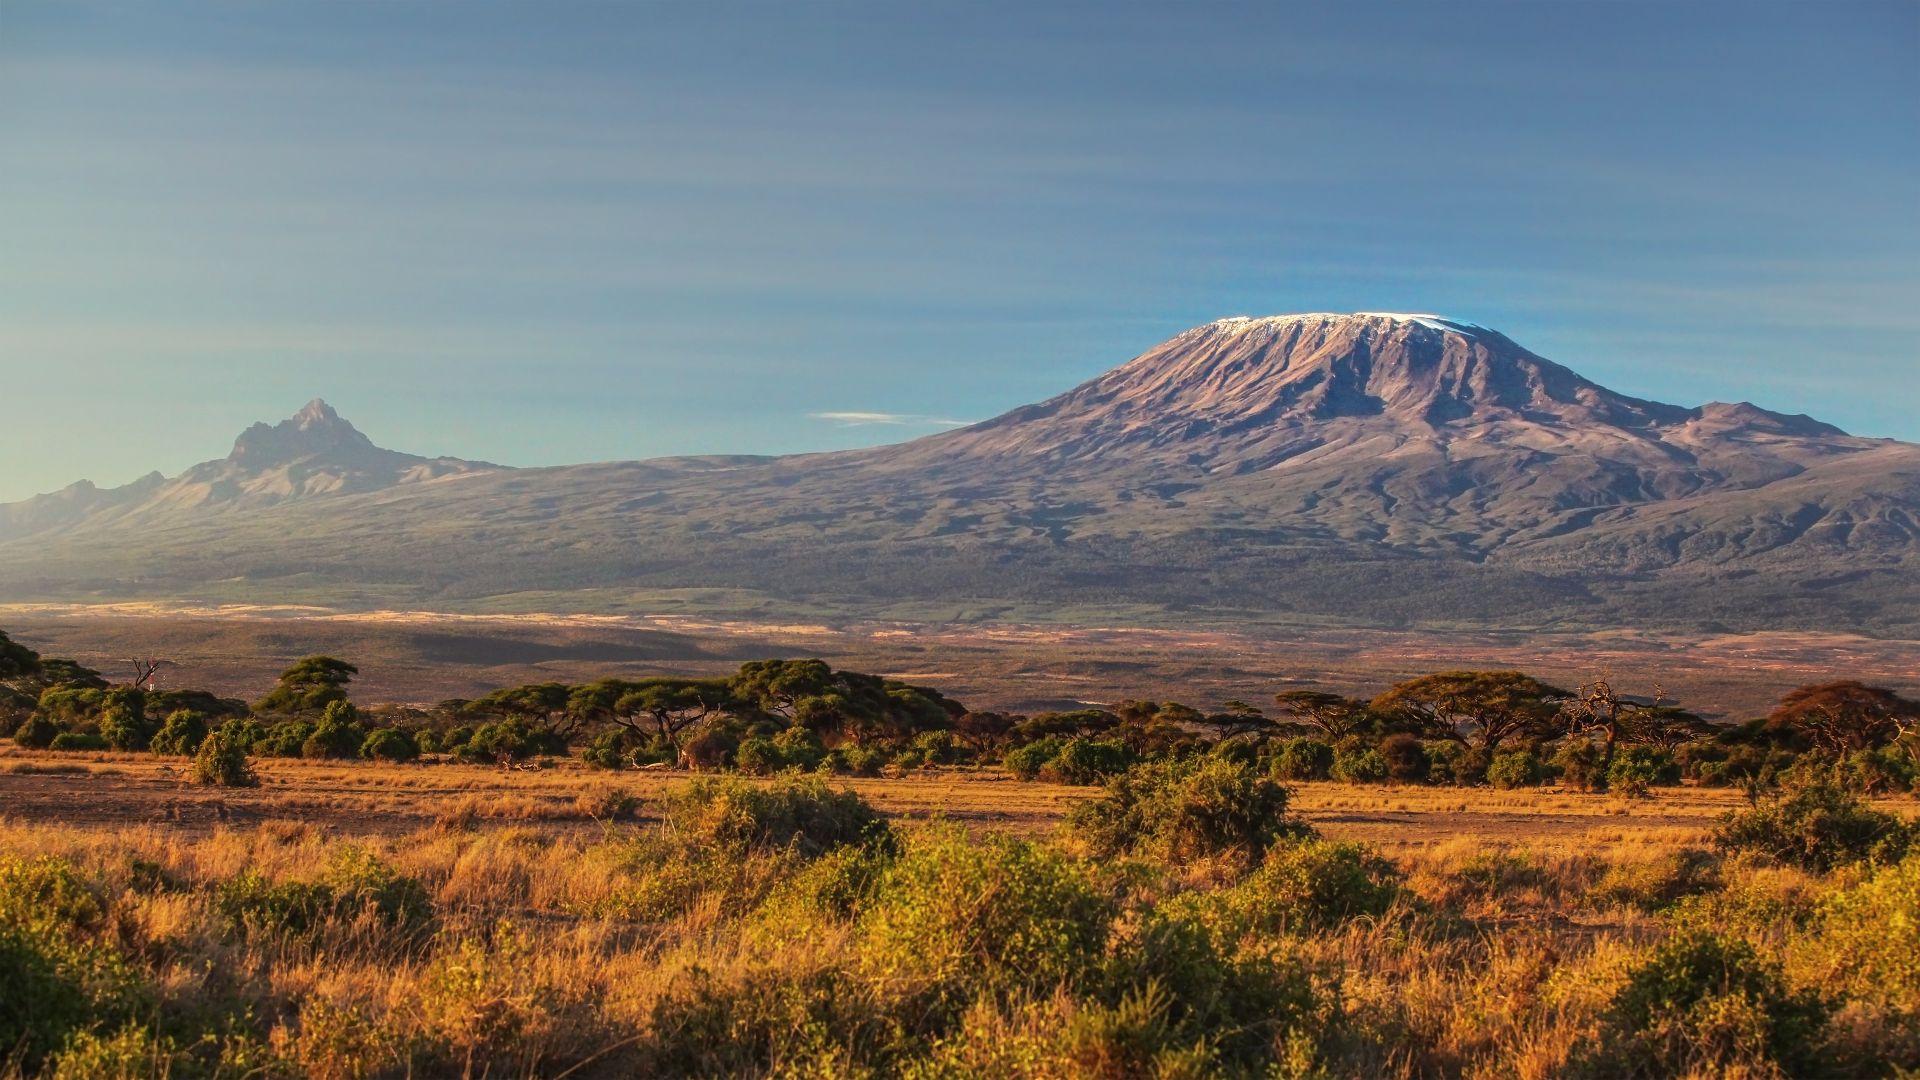 Mount Kilimanjaro, the highest peak in Africa